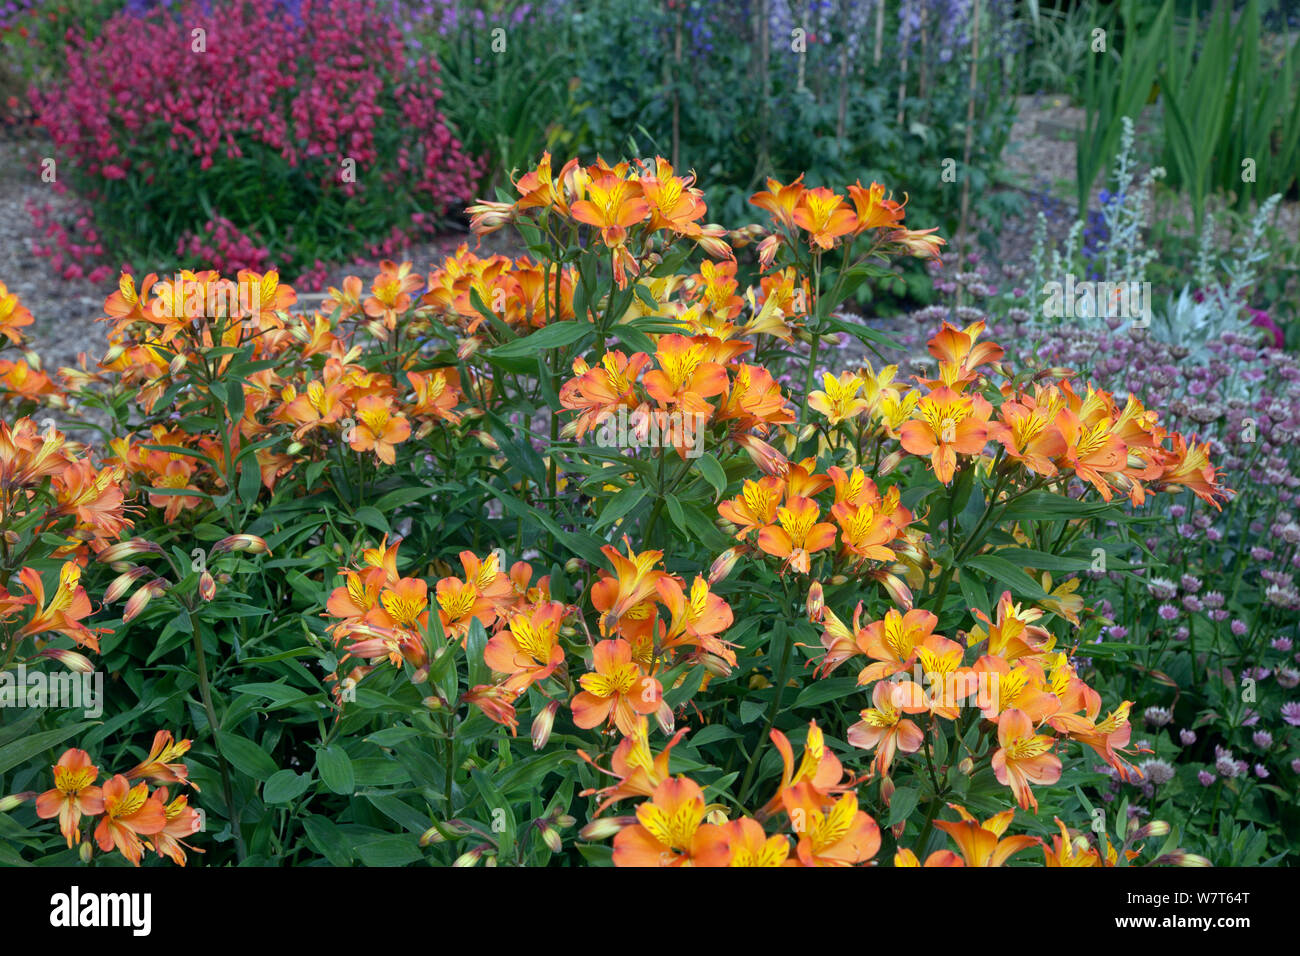 Alstroemeria 'Golden Delight' / Peruvian lily, in flower in garden, UK, July. Stock Photo